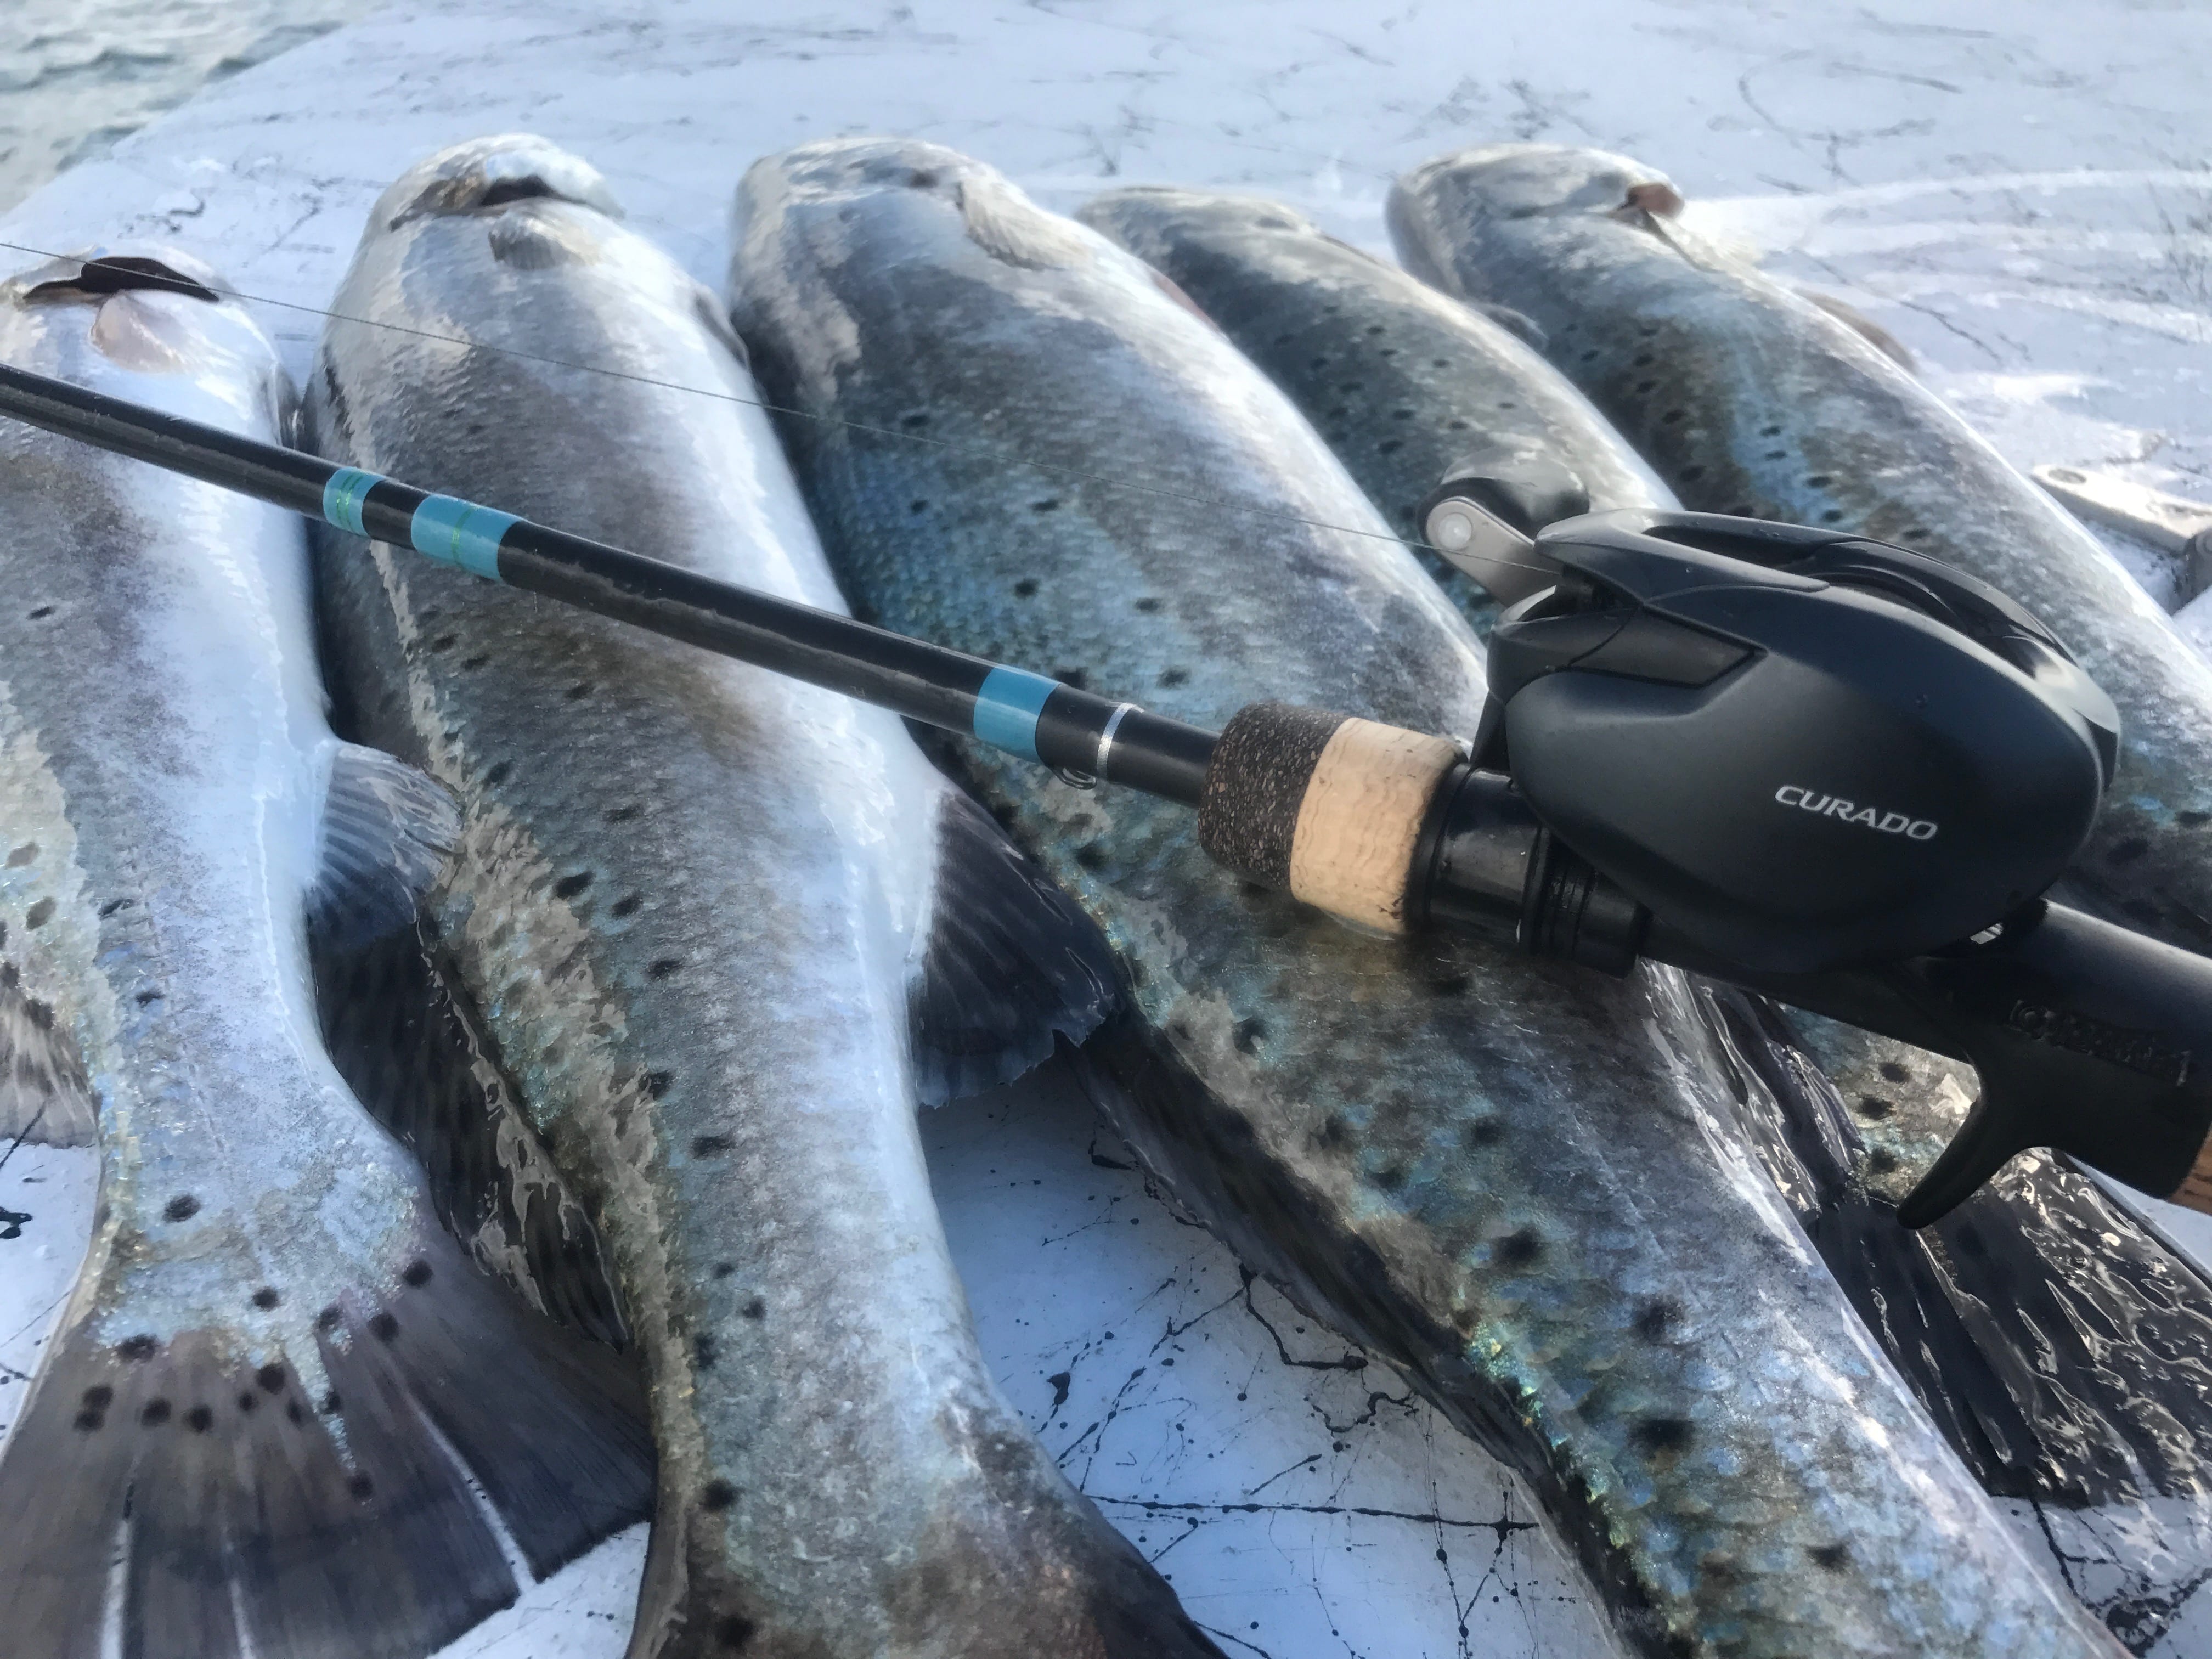 Curado 200 K Series: The new casting reel for bass, coastal fishing - Texas  Hunting & Fishing